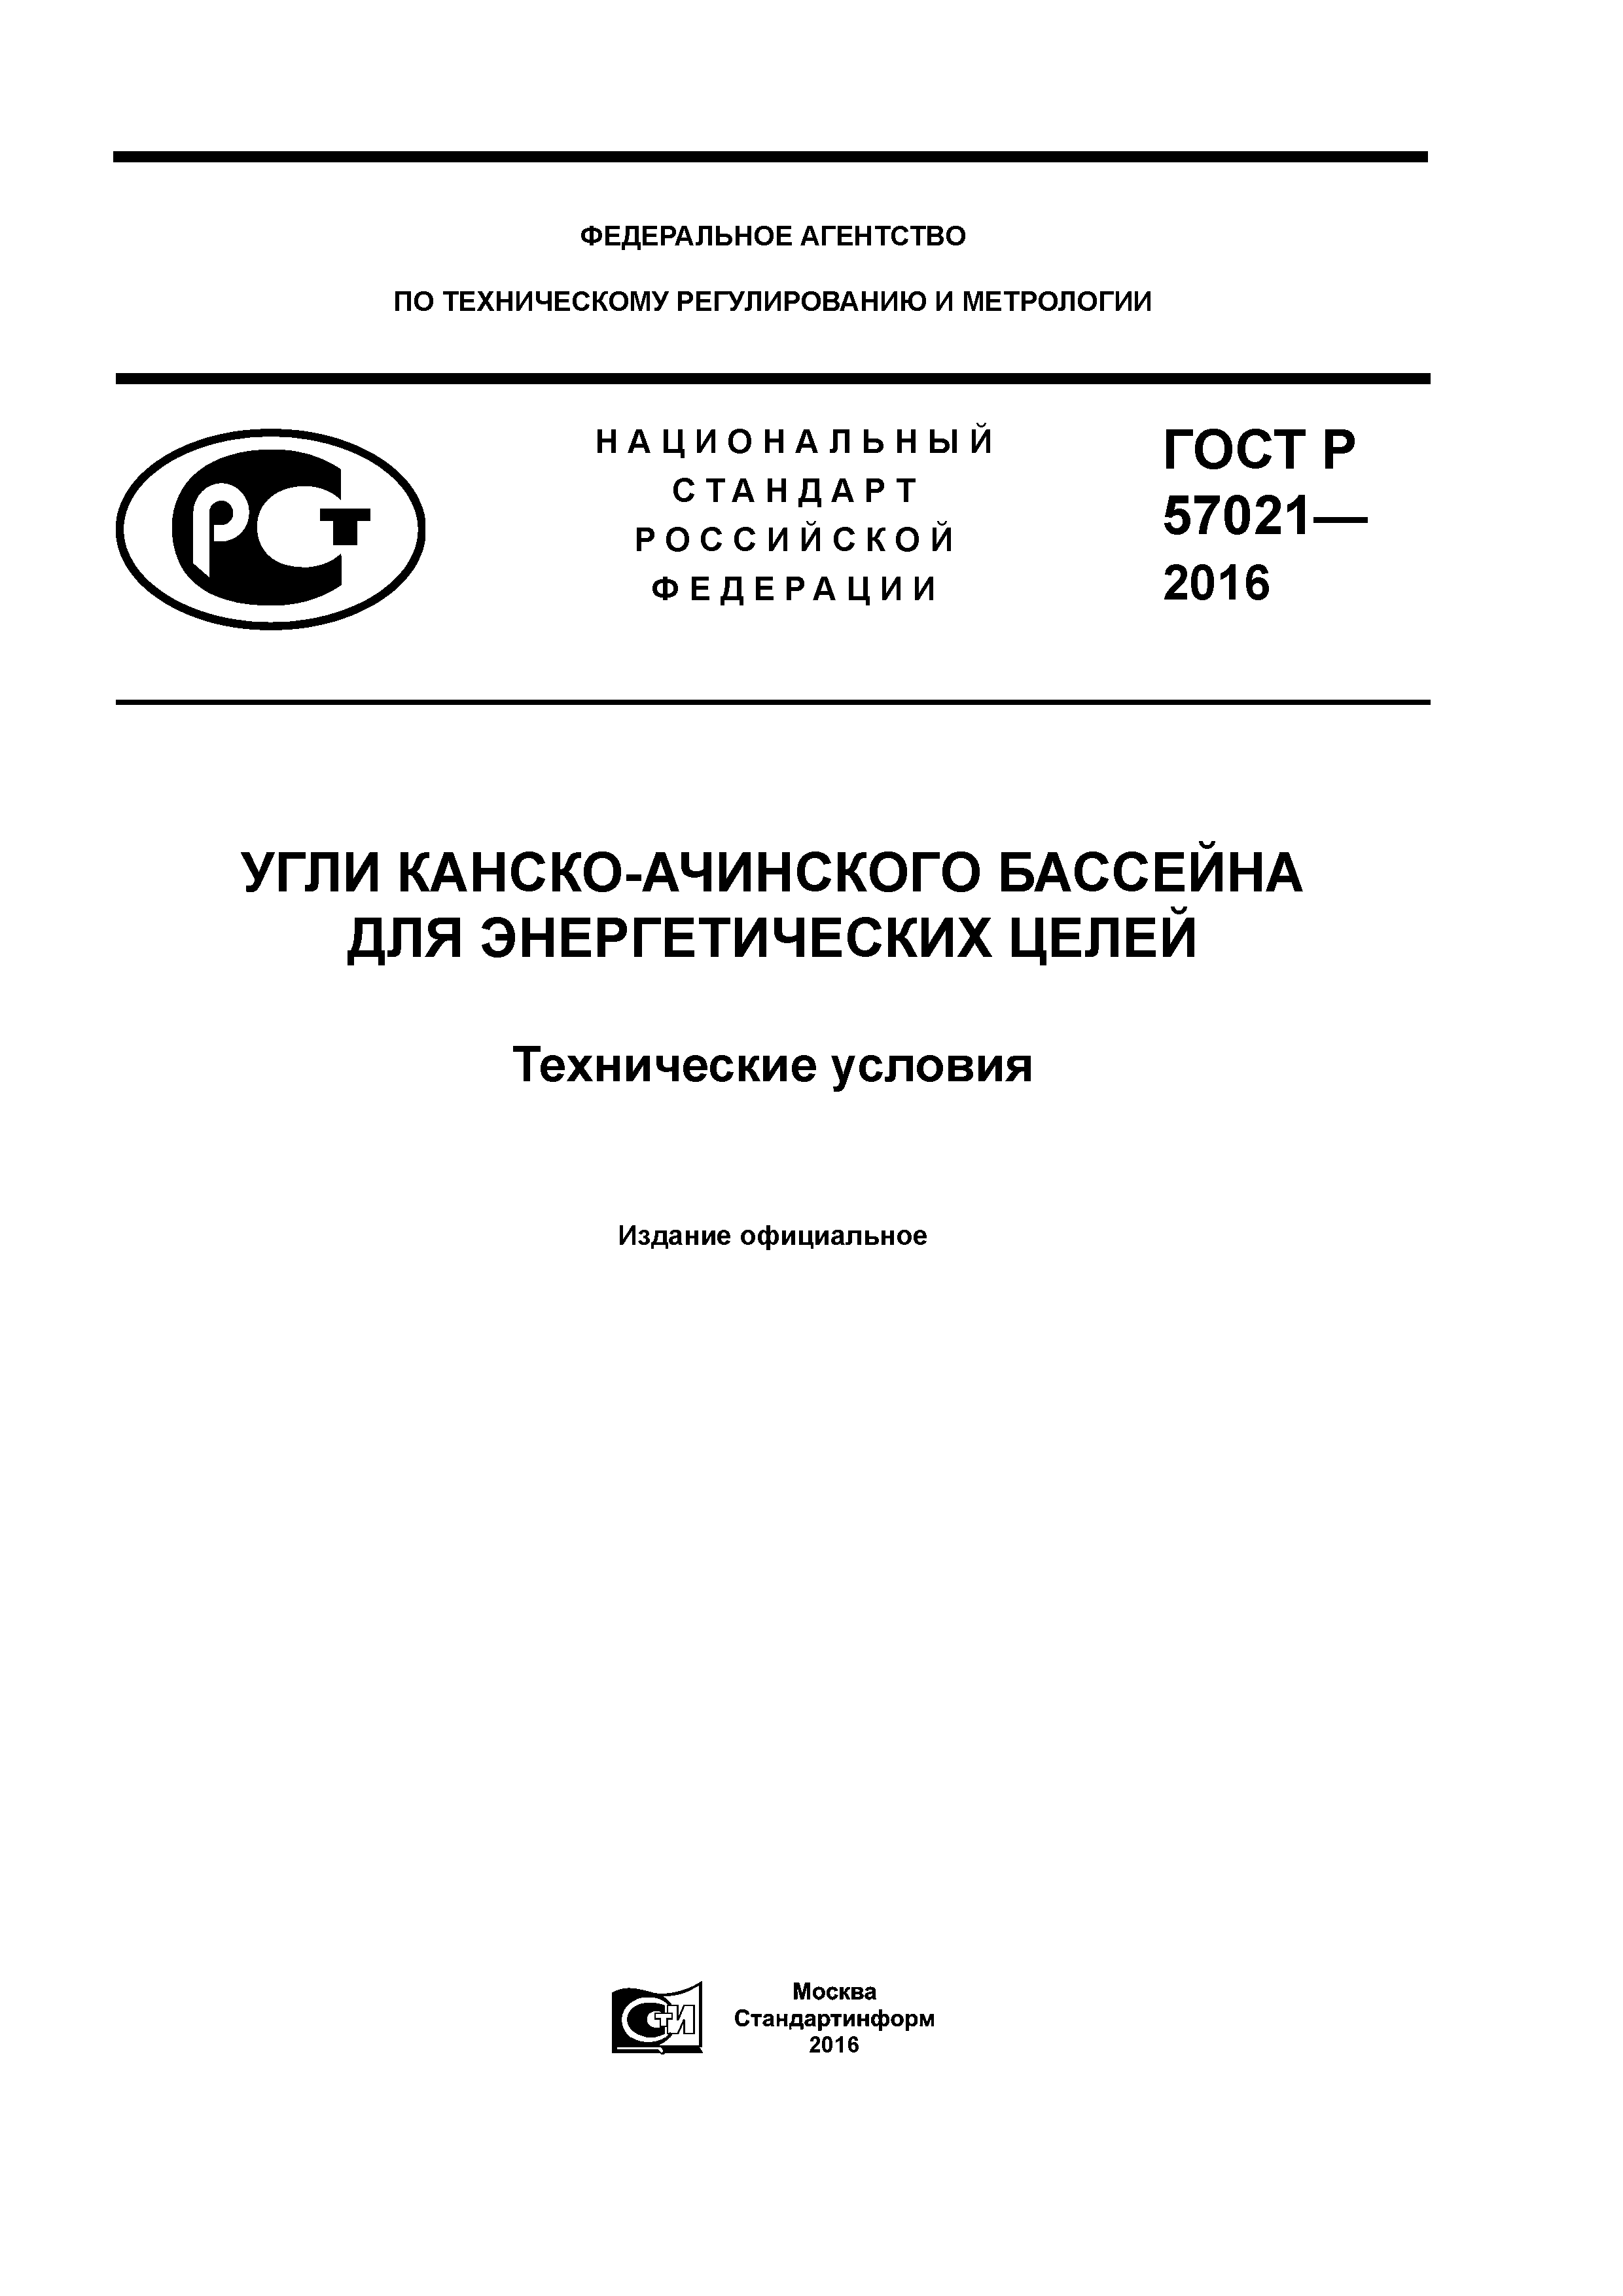 ГОСТ Р 57021-2016